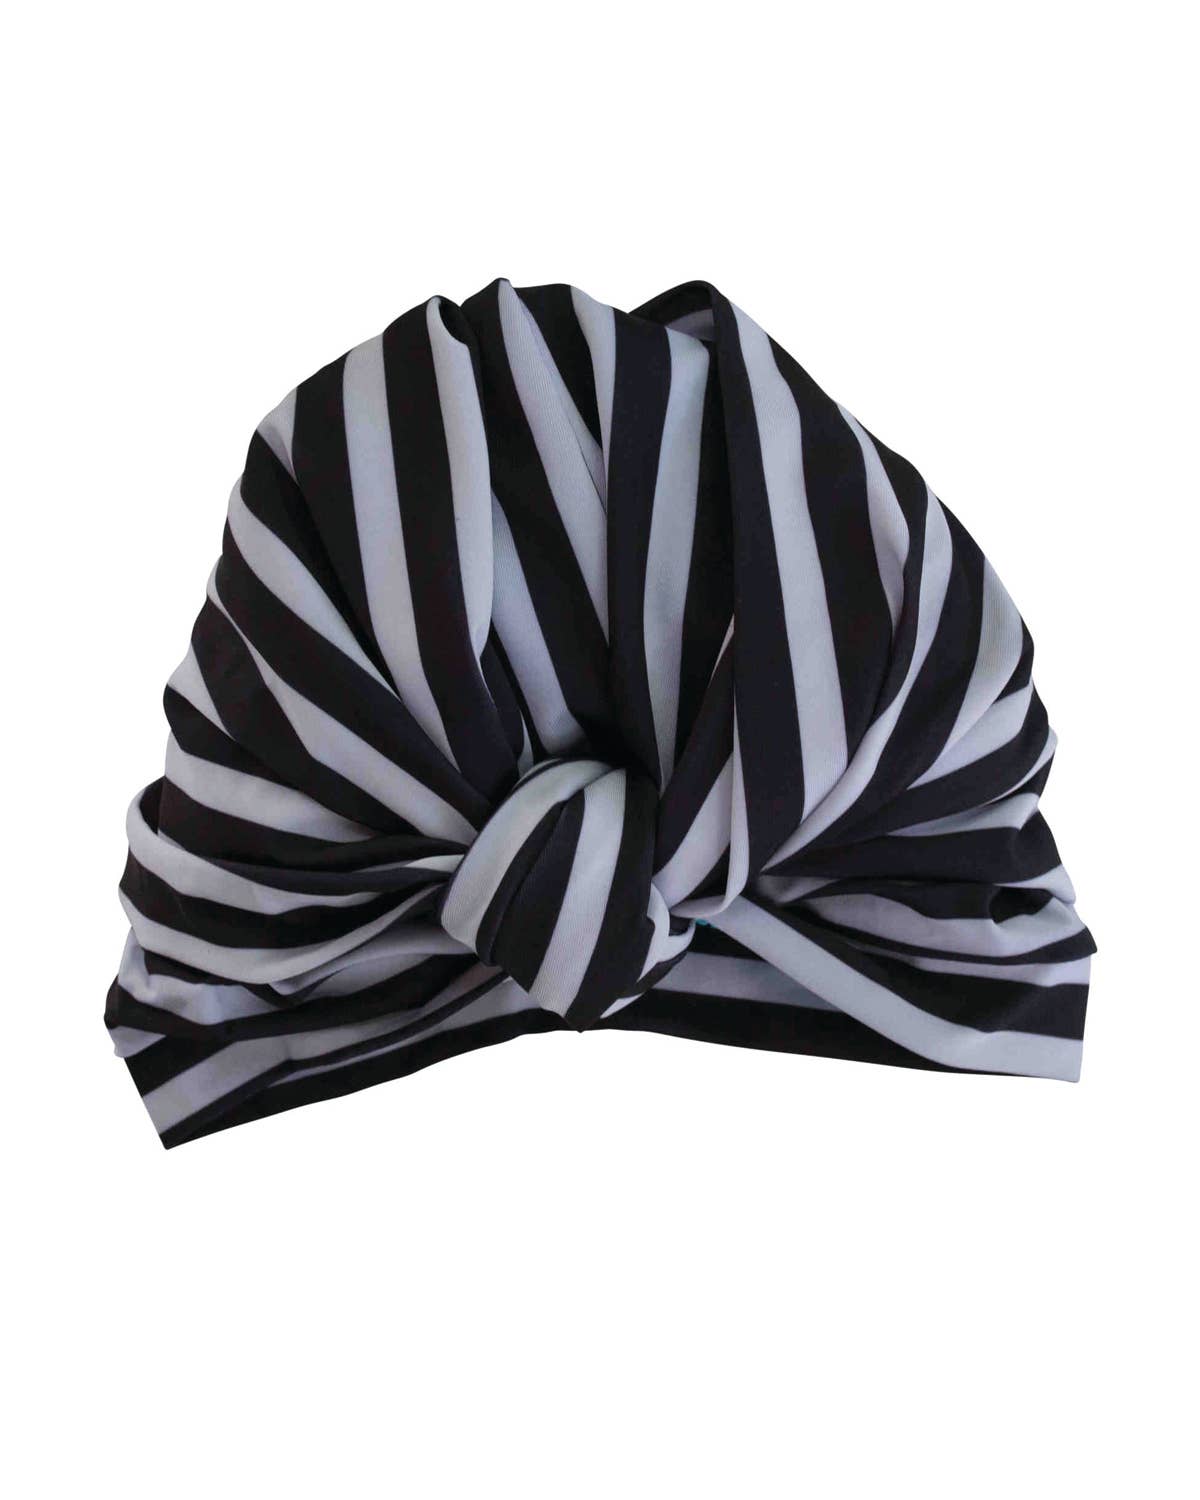 Dahlia Shower Cap in Monochrome Stripe